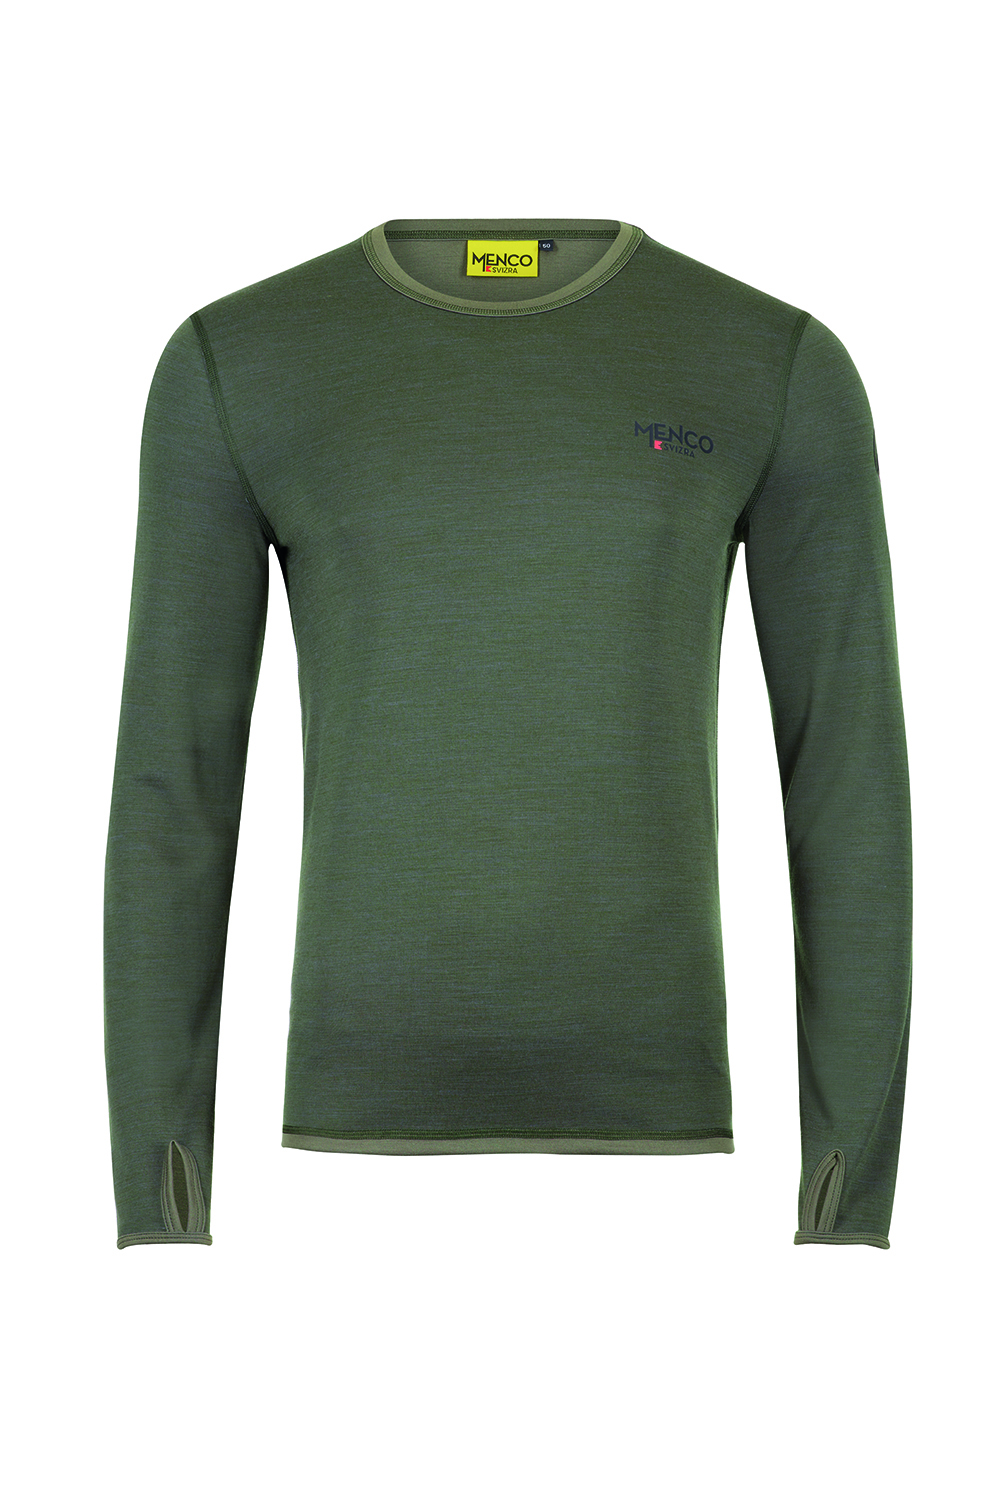 MENCO Laurin Merino Shirt Langarm (menco green)